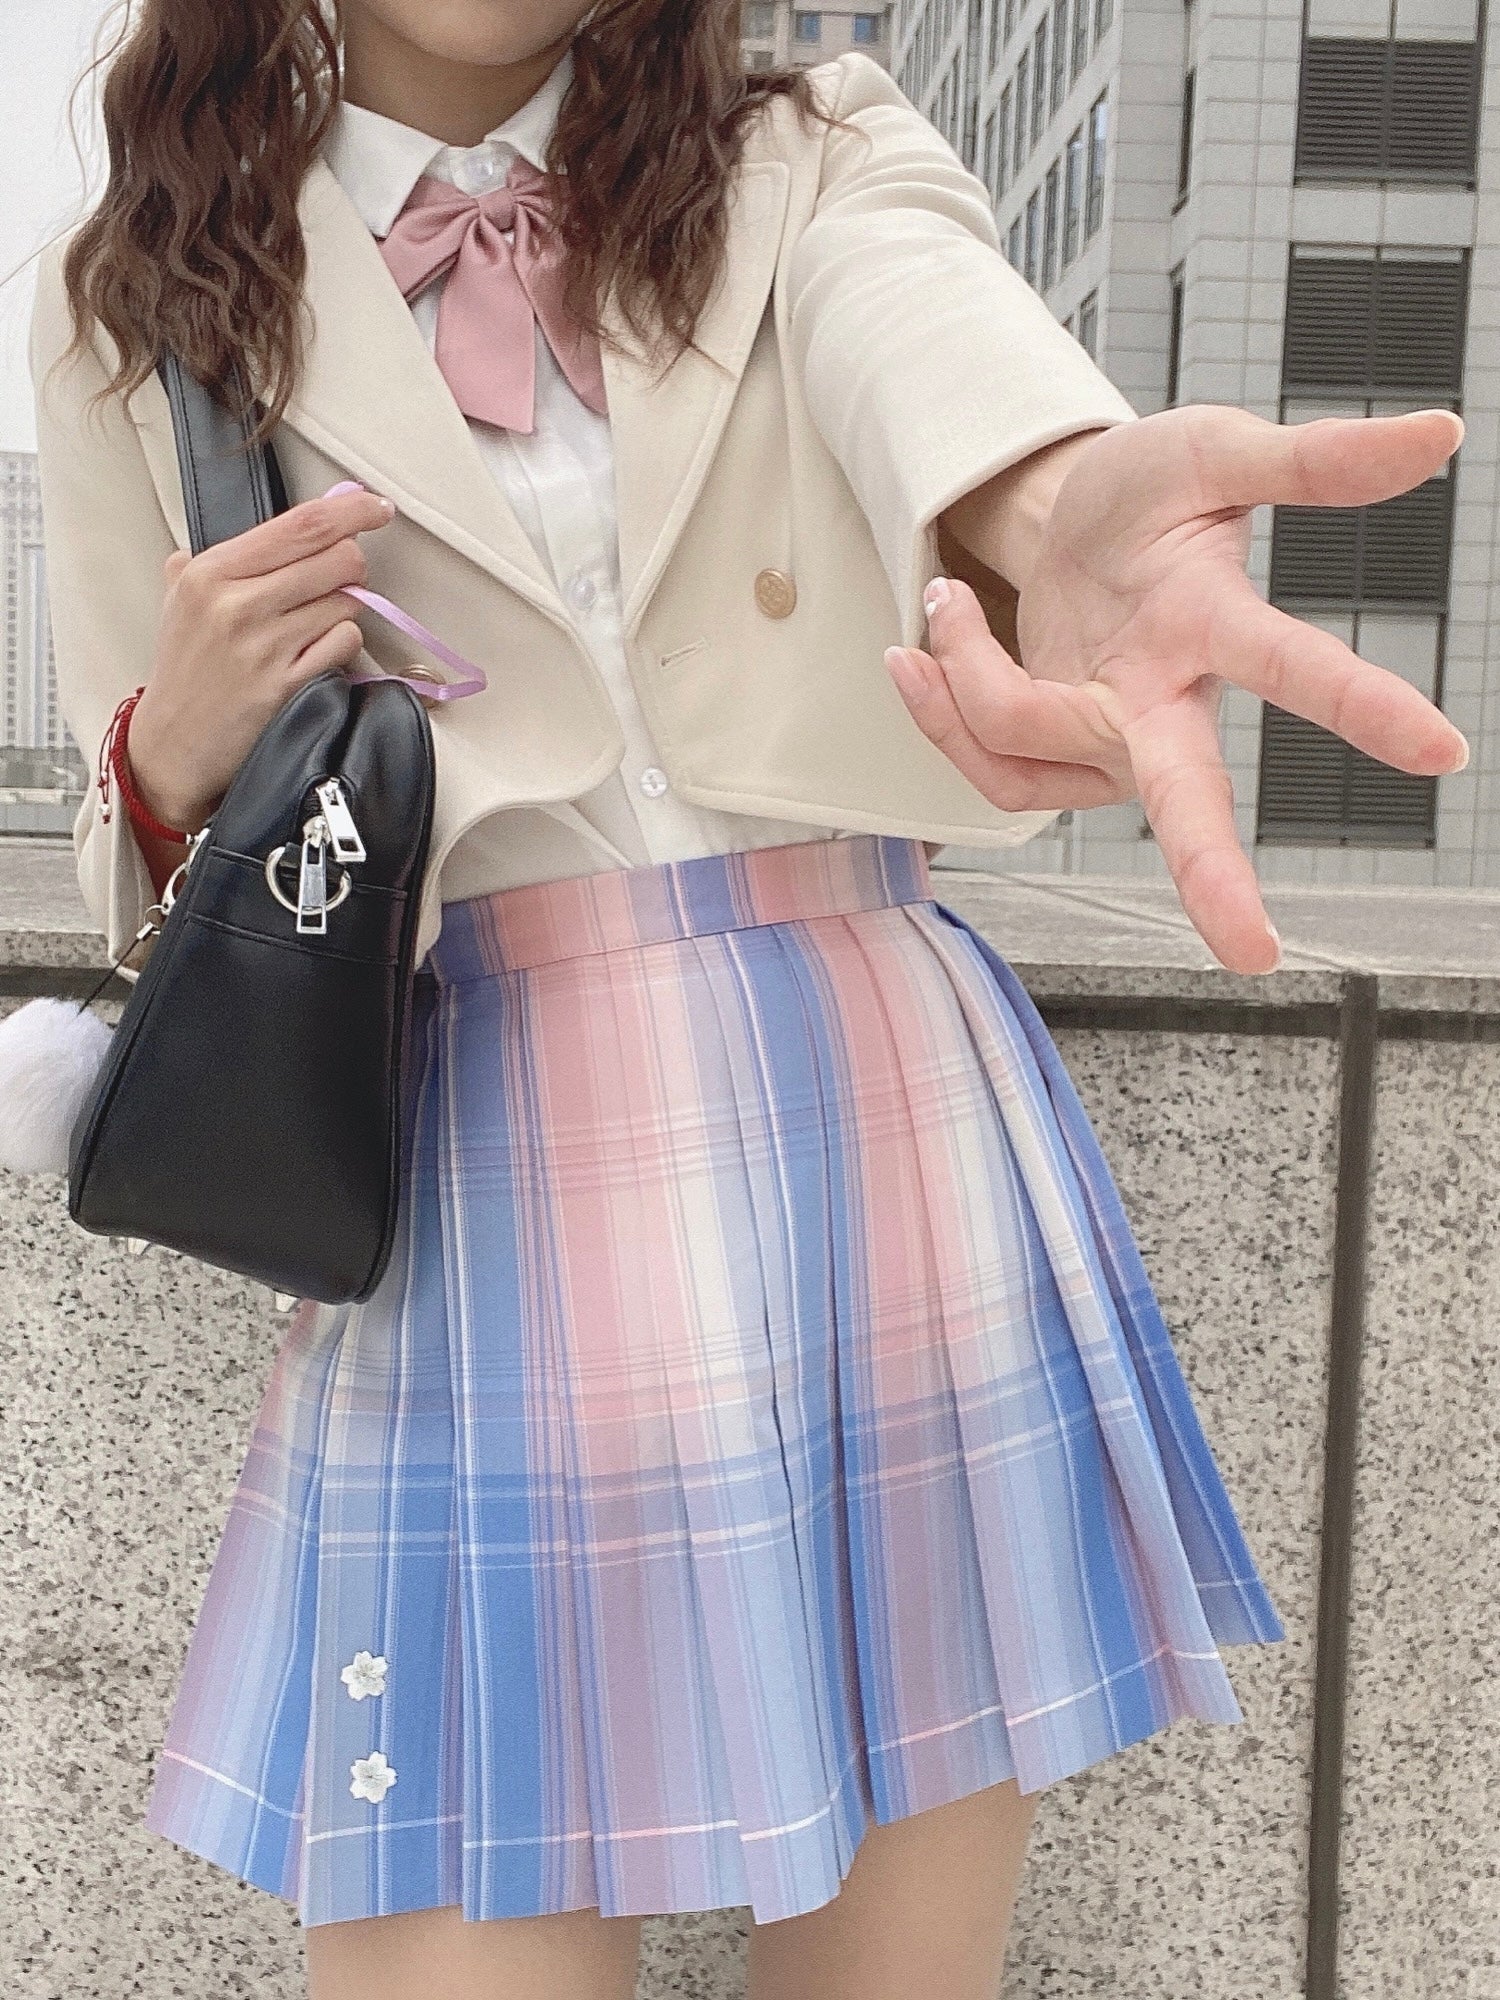 Sakura Lollipop JK Uniform Skirts-ntbhshop